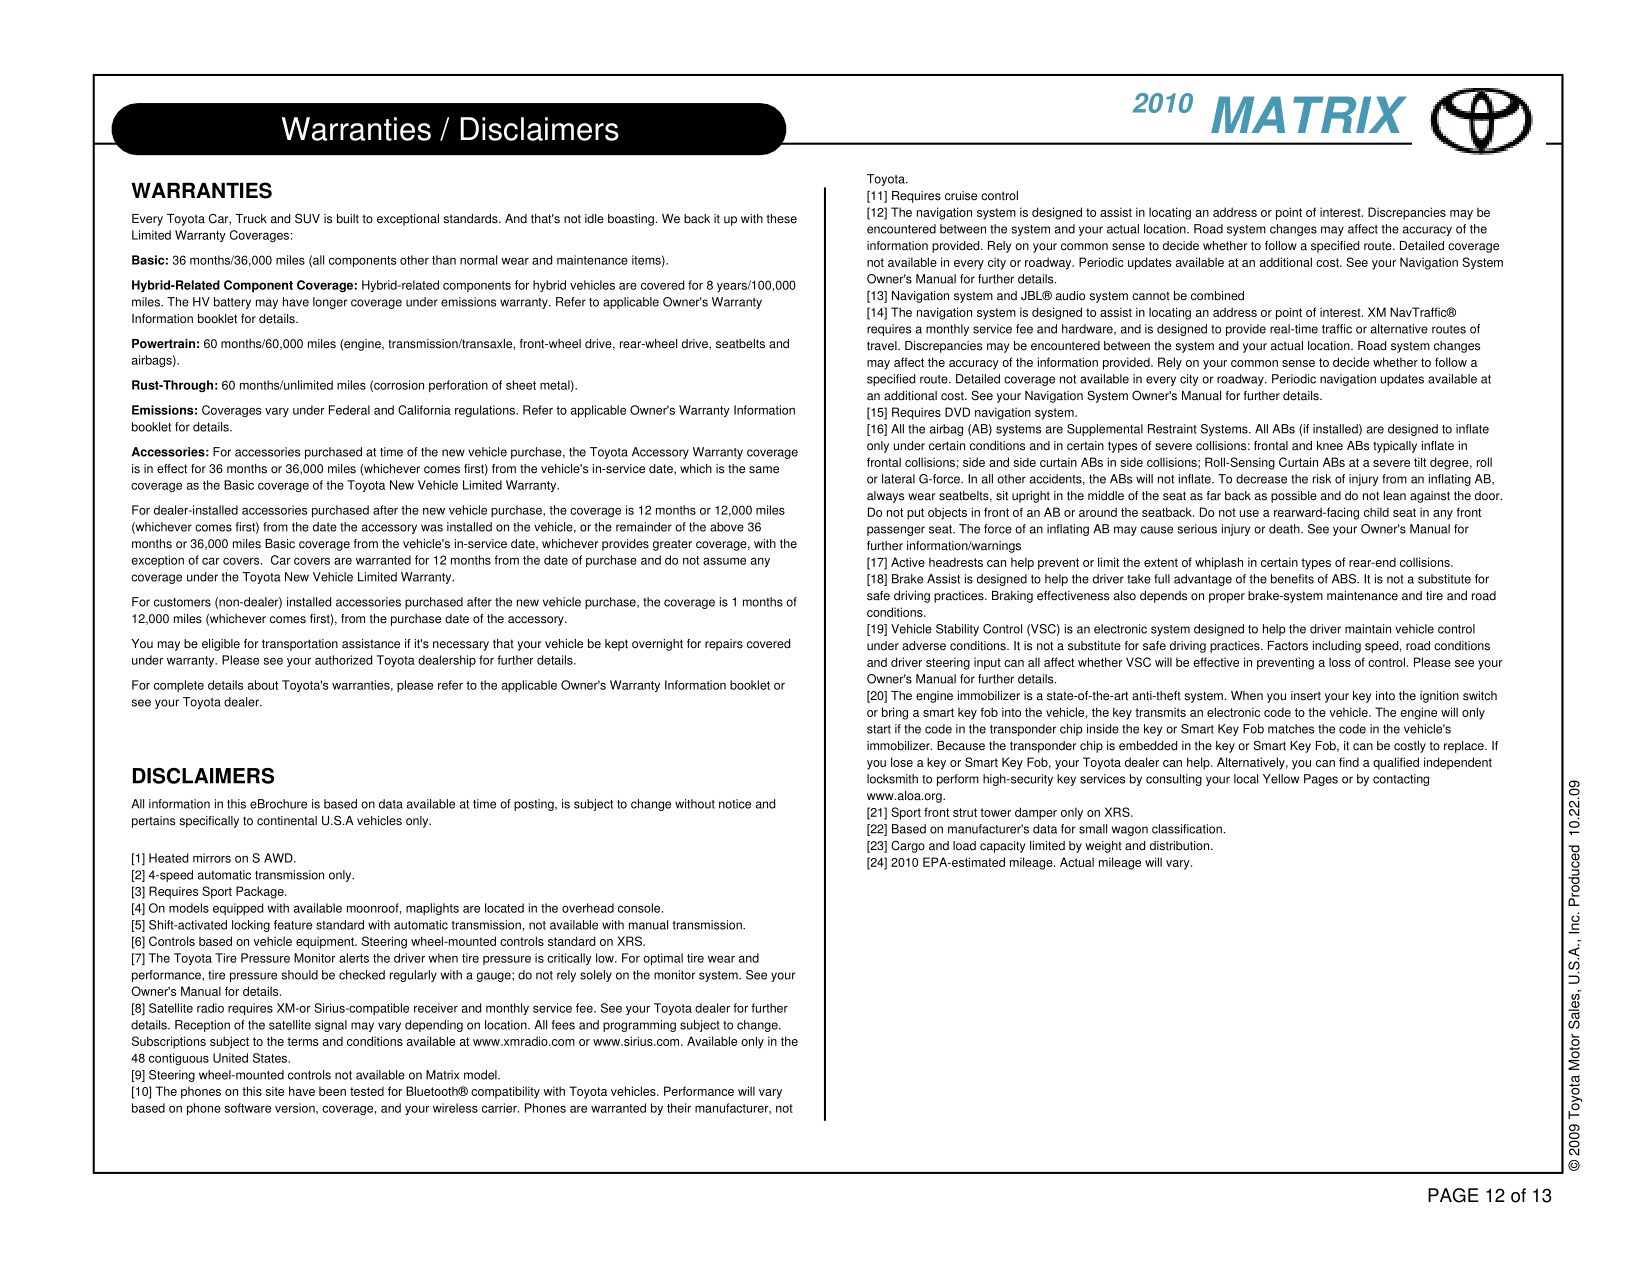 2010 Toyota Matrix Brochure Page 6